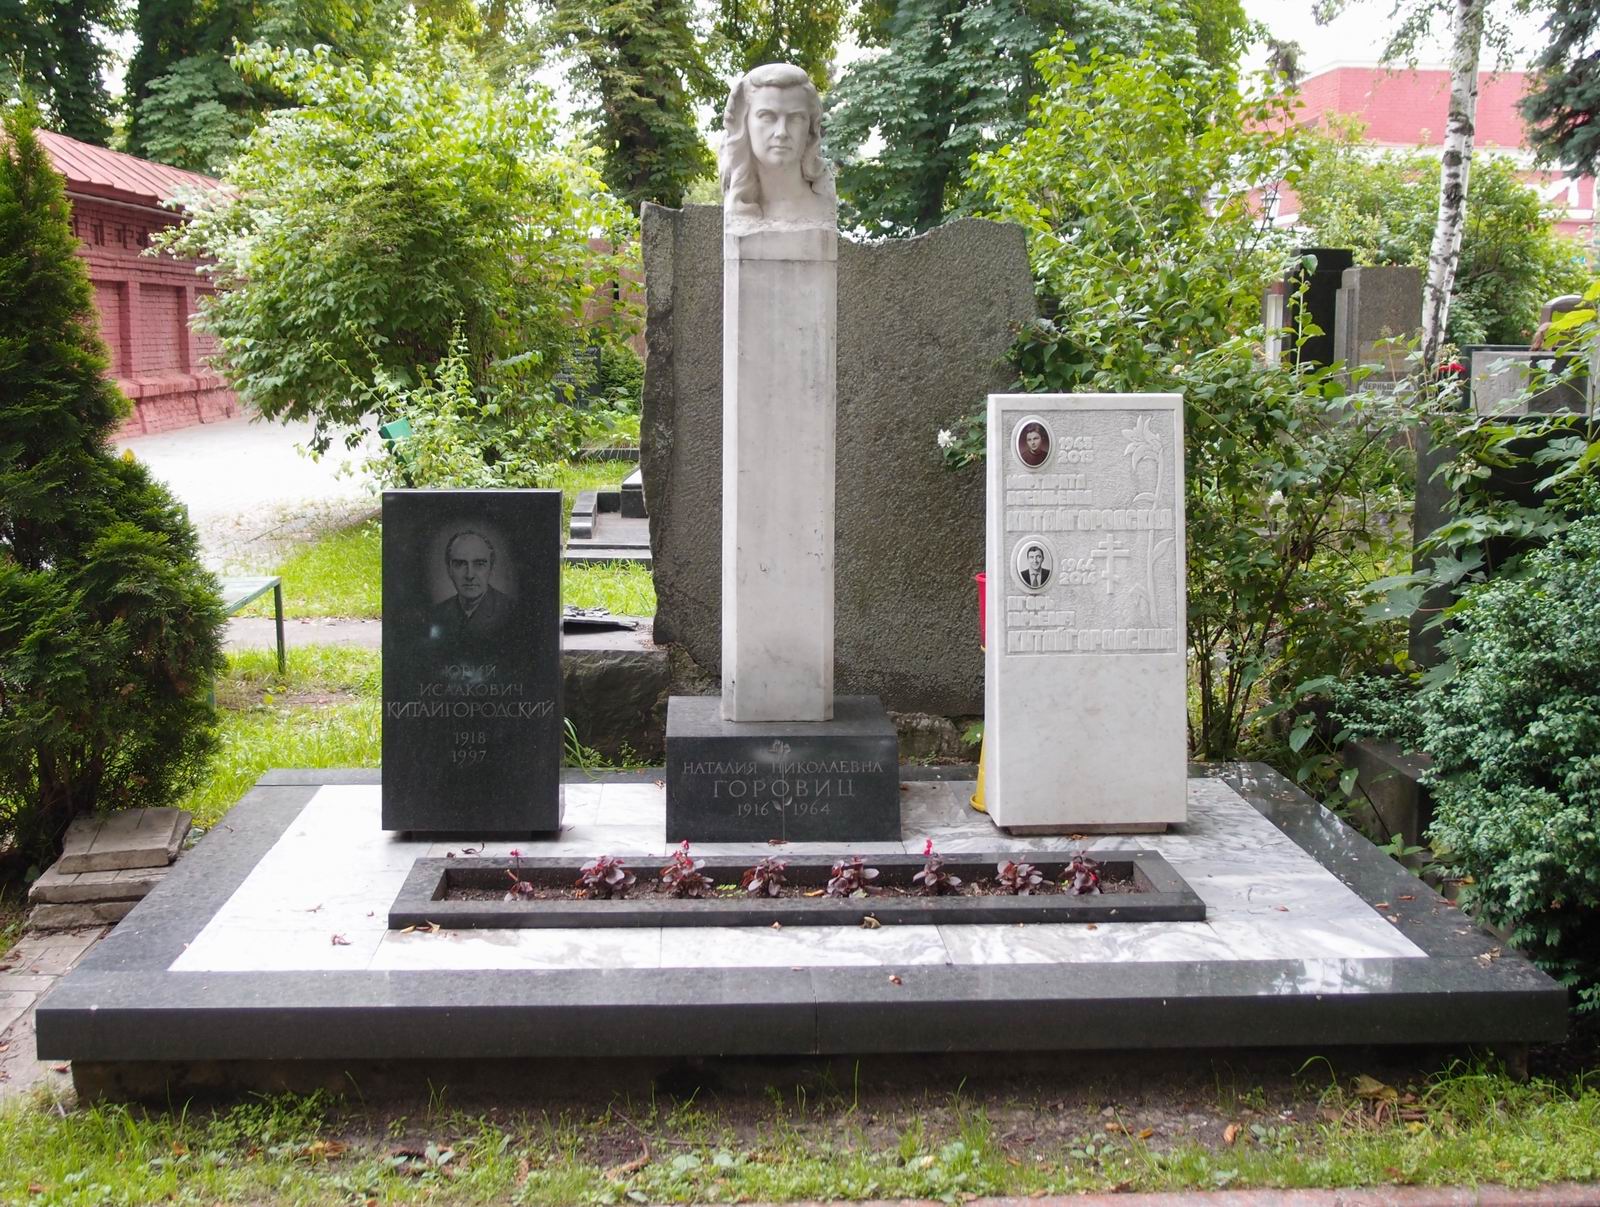 Памятник на могиле Горовиц-Китайгородской Н.Н. (1916-1964), ск. Е.Янсон-Манизер, арх. П.Скокан, на Новодевичьем кладбище (5-8-1).